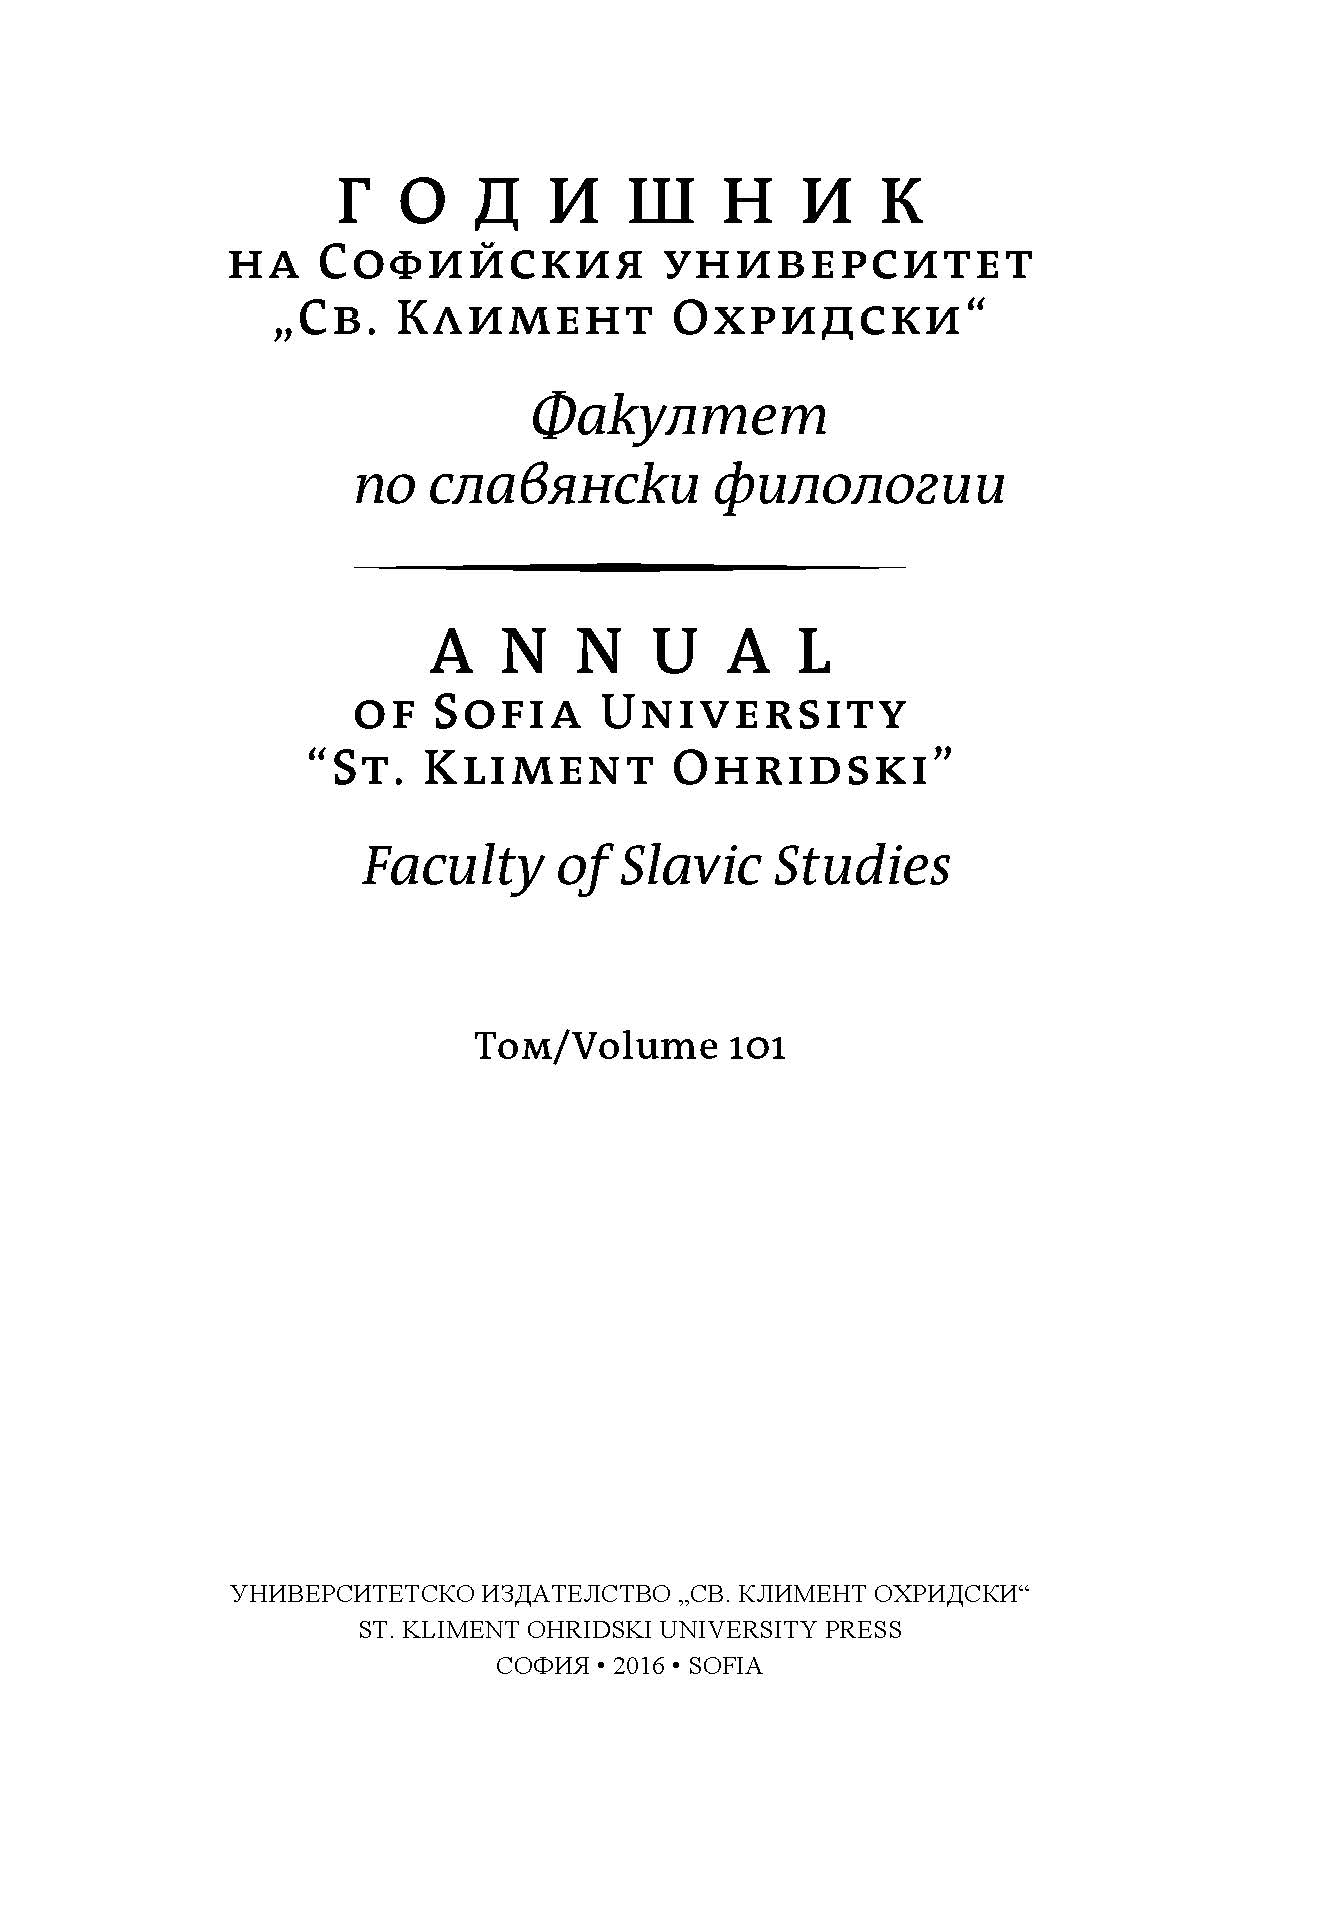 Annual of Sofia University “St. Kliment Ohridski”, Faculty of Slavic Studies Cover Image